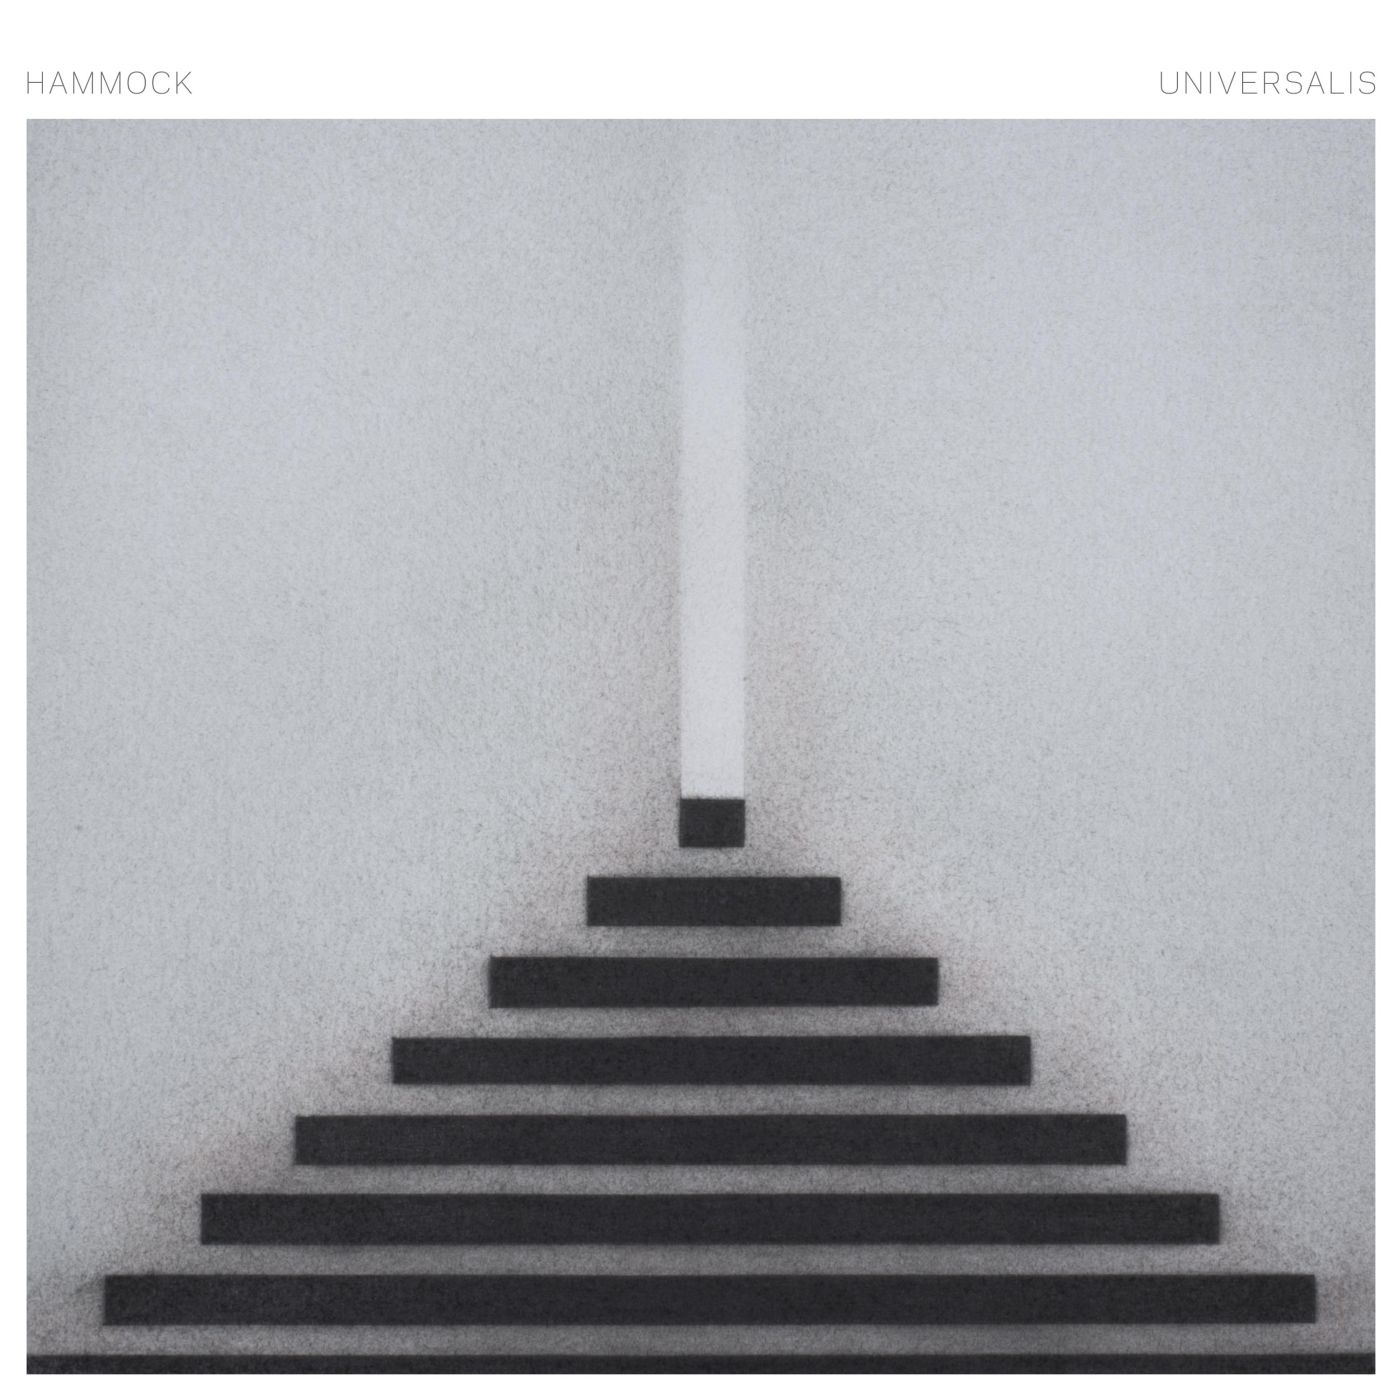 Hammock - Universalis (2018) Album Info